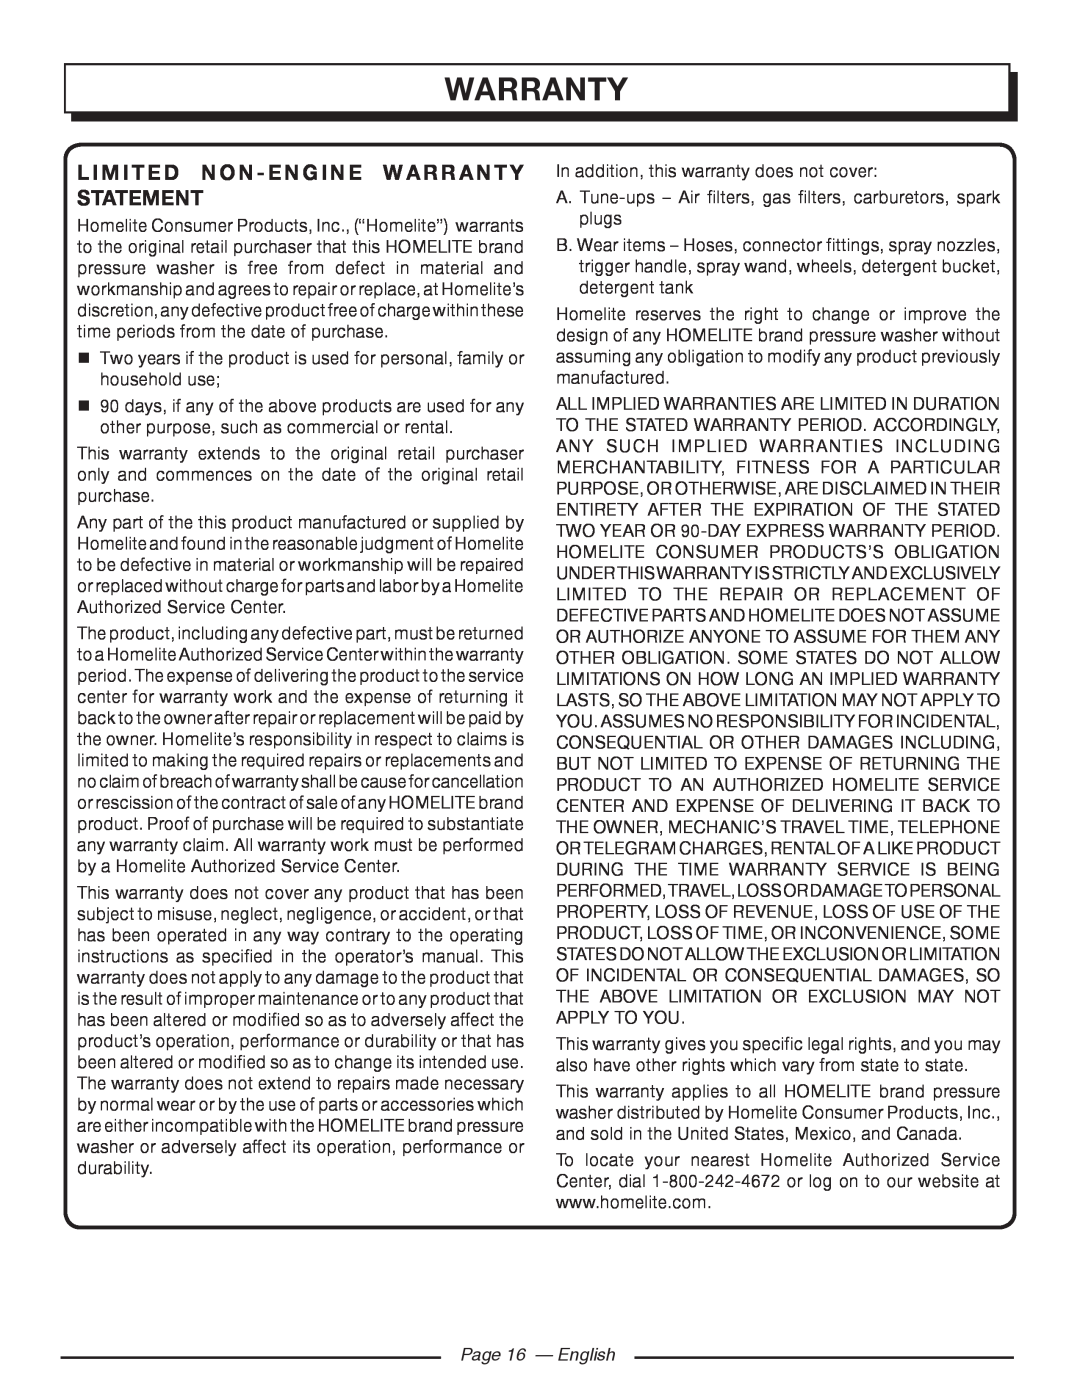 Homelite UT80953, UT80522 manuel dutilisation Limited Non - Engine Warranty Statement, Page 16 - English 